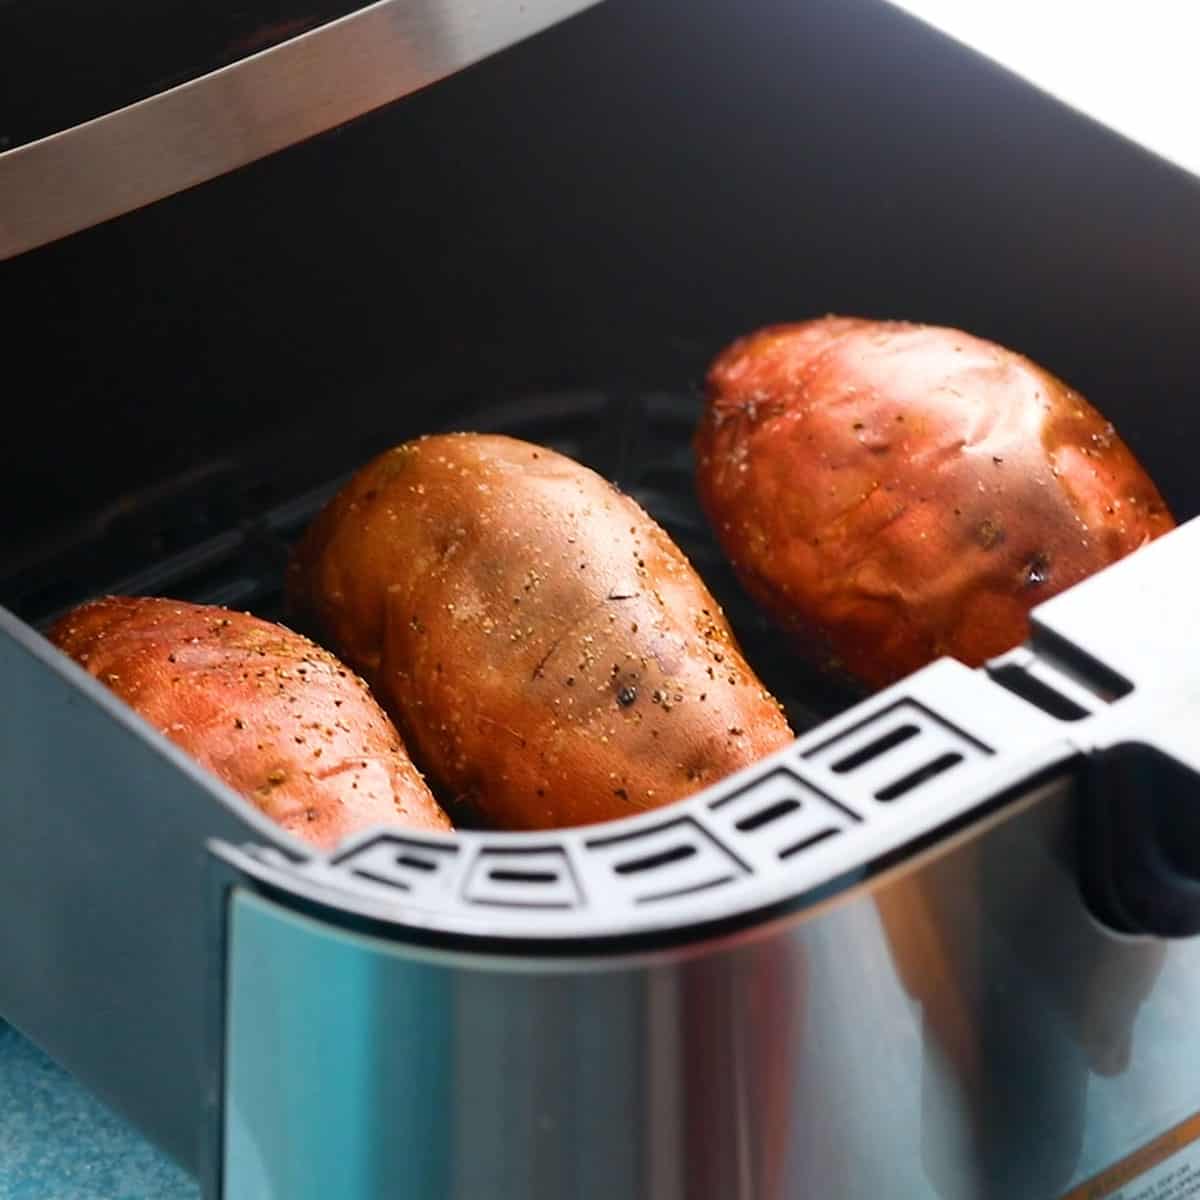 https://www.kitchenathoskins.com/wp-content/uploads/2022/09/baked-sweet-potato-no-text.35.jpg